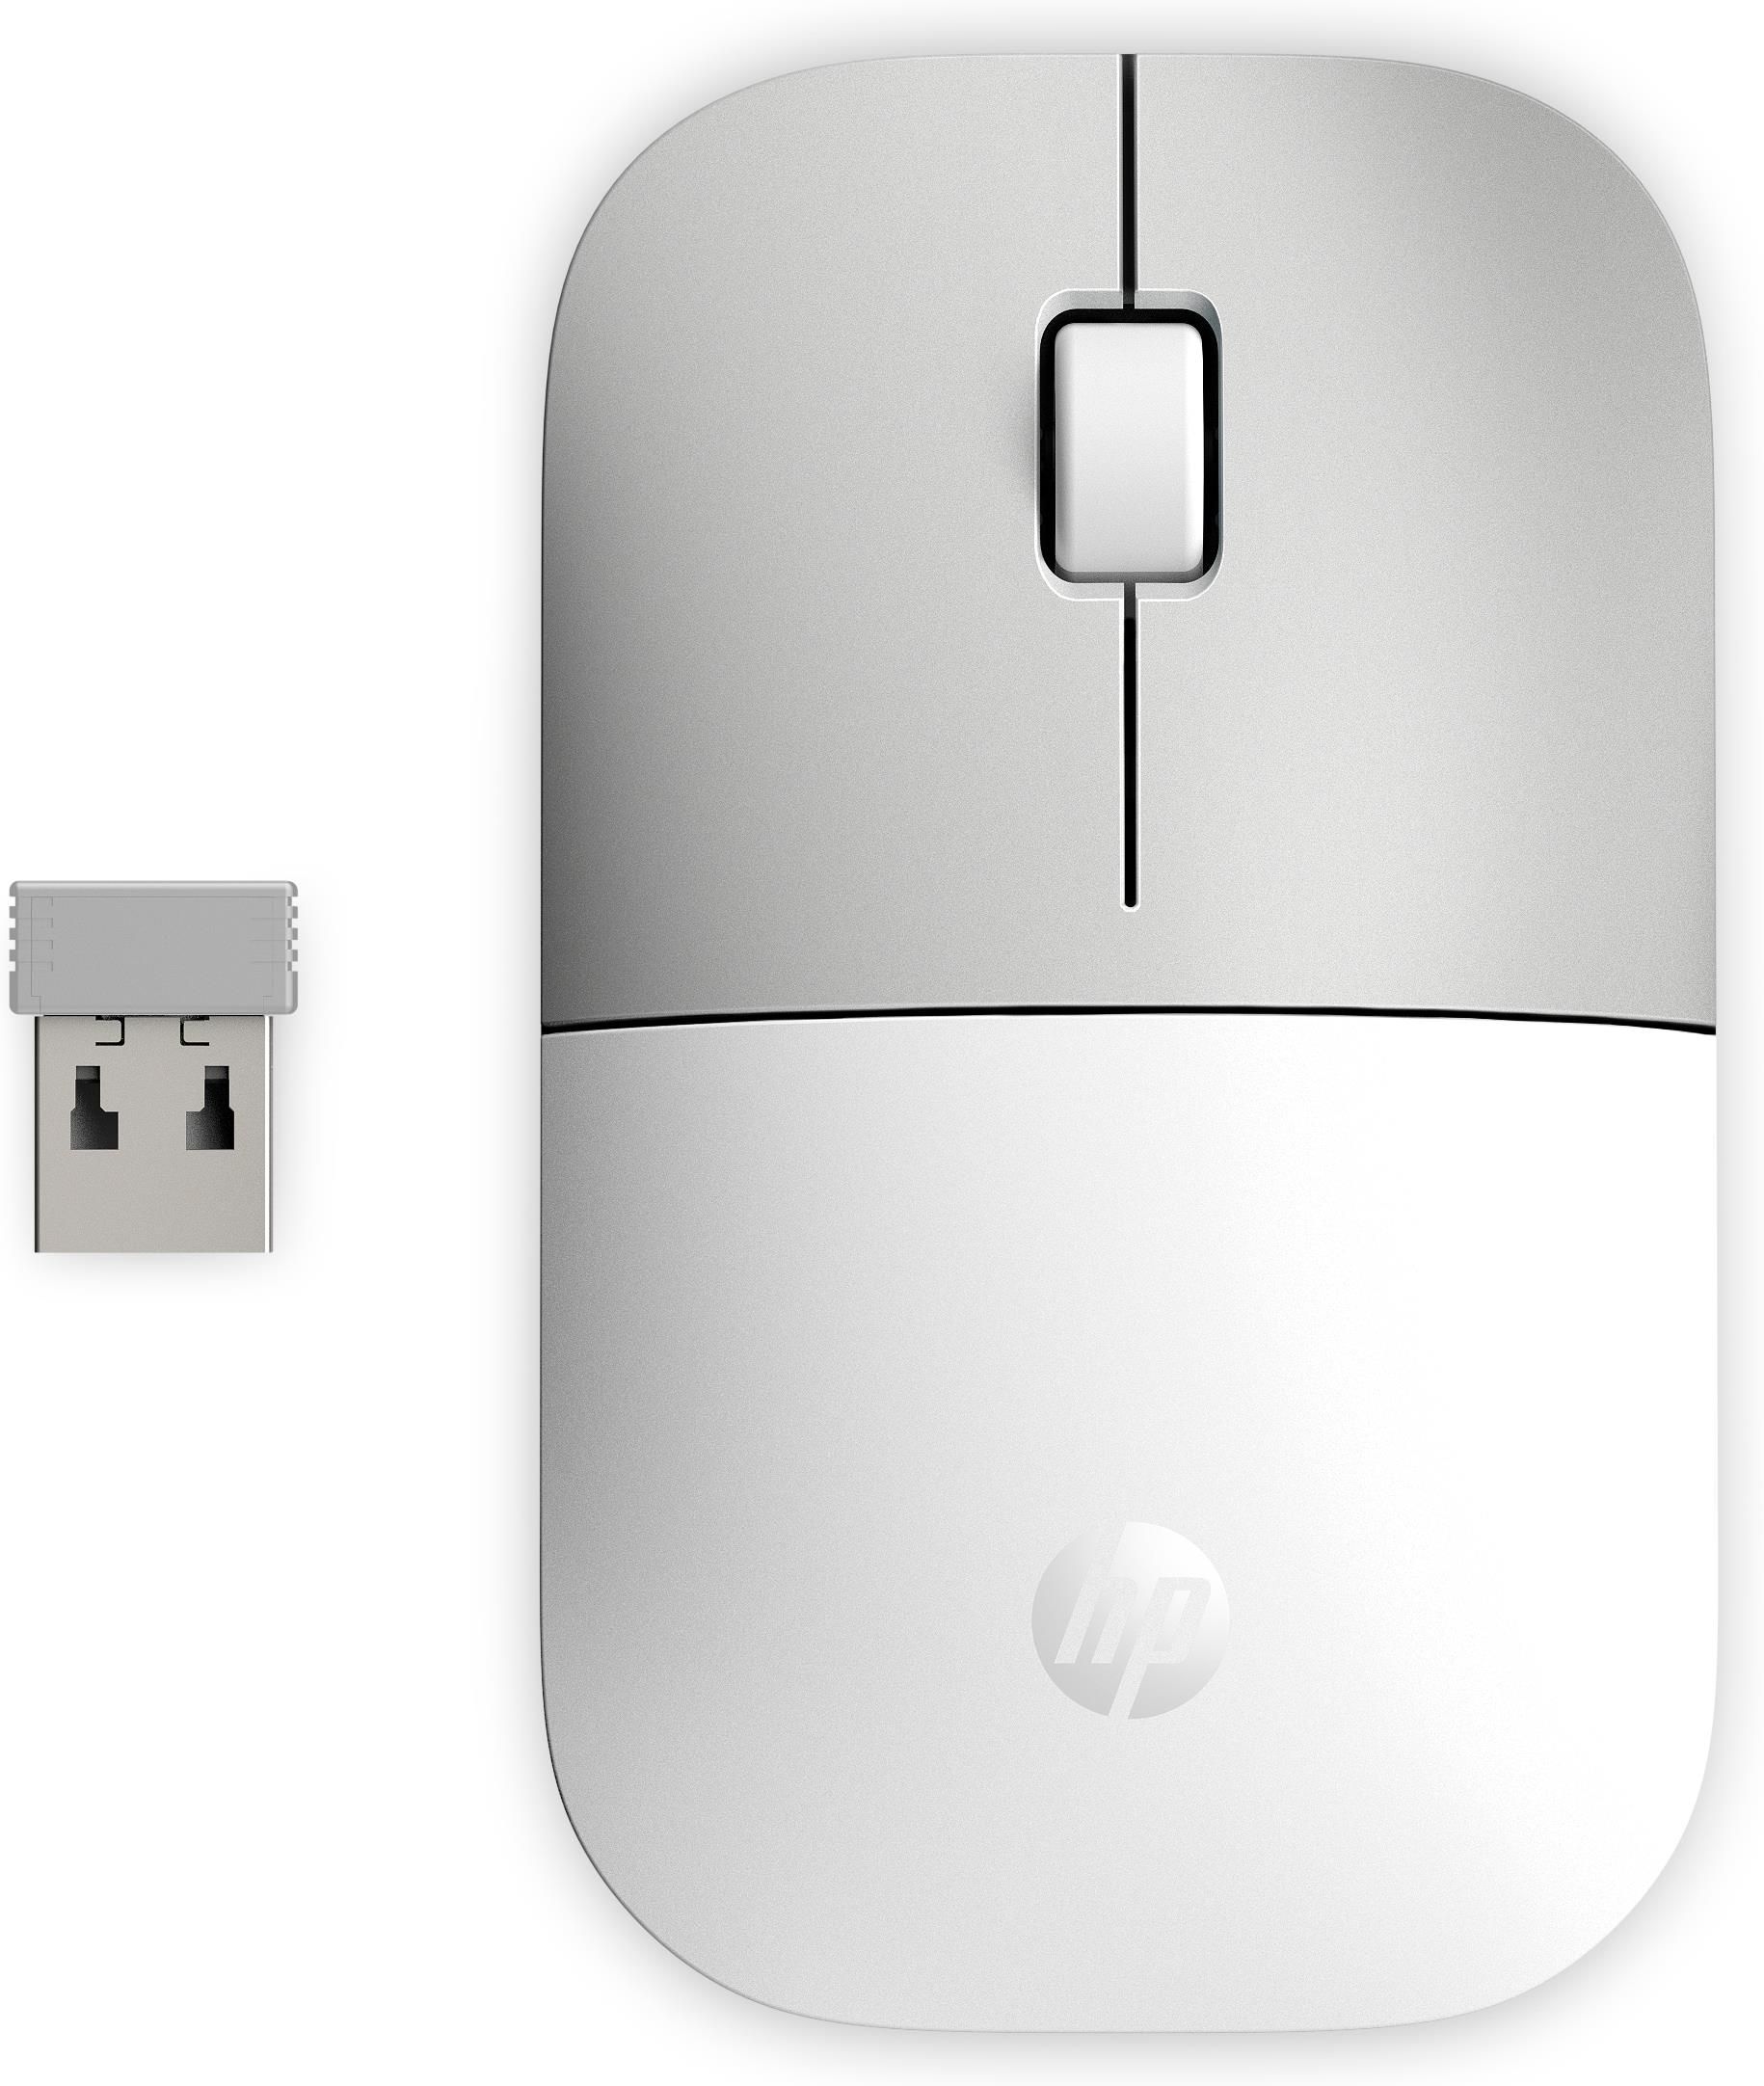 HP Z3700 Mouse Rf